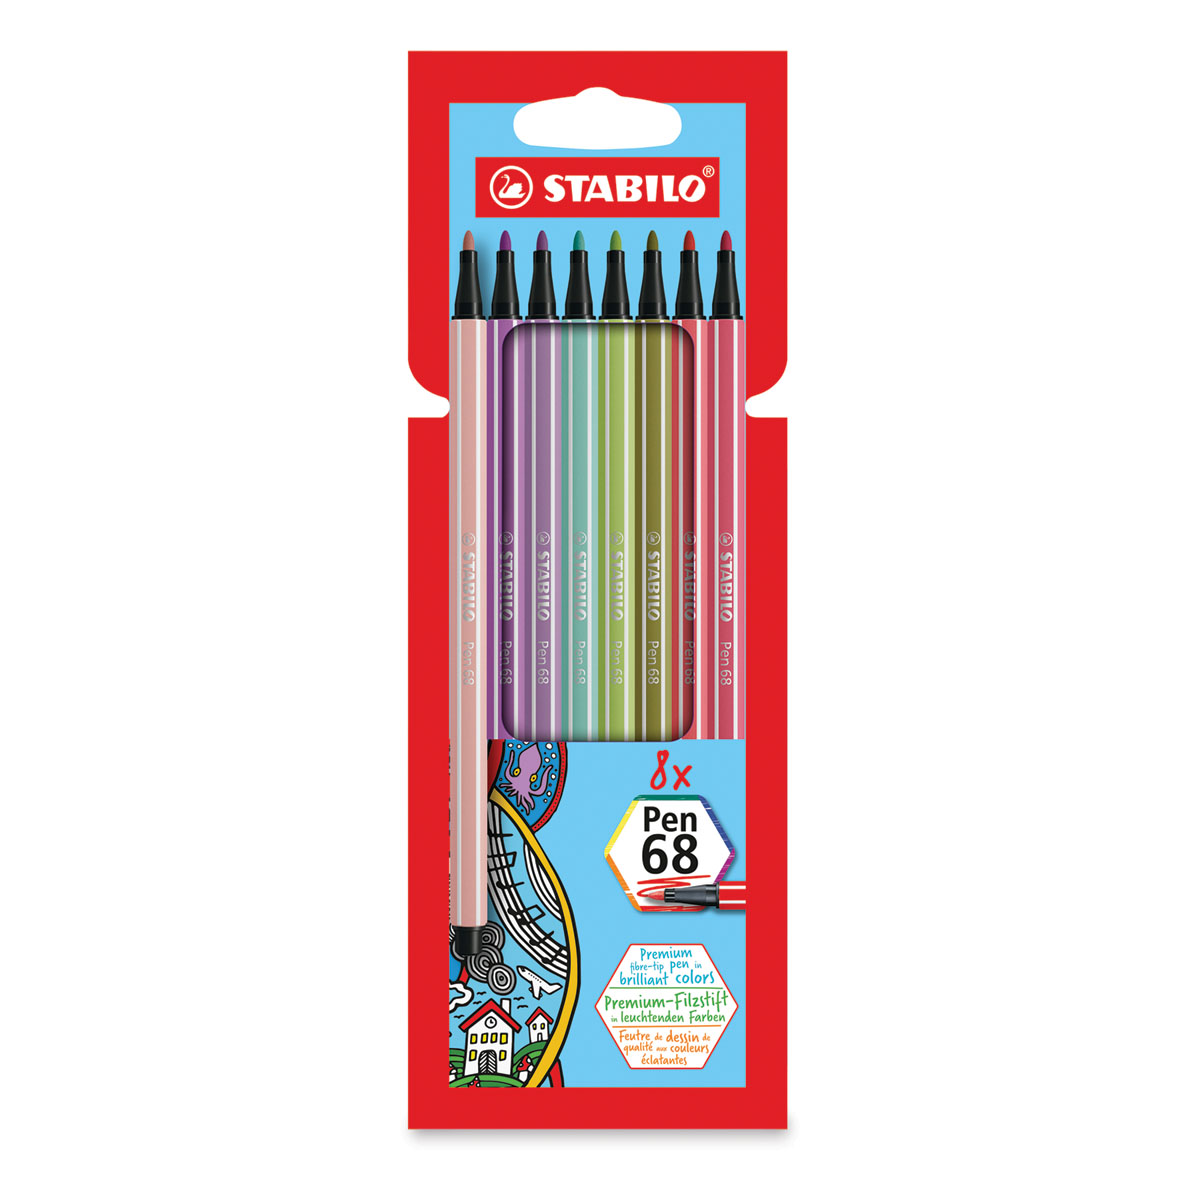 Stabilo Pen 68 Set - Pastel Colors, Set of 8 | BLICK Art Materials